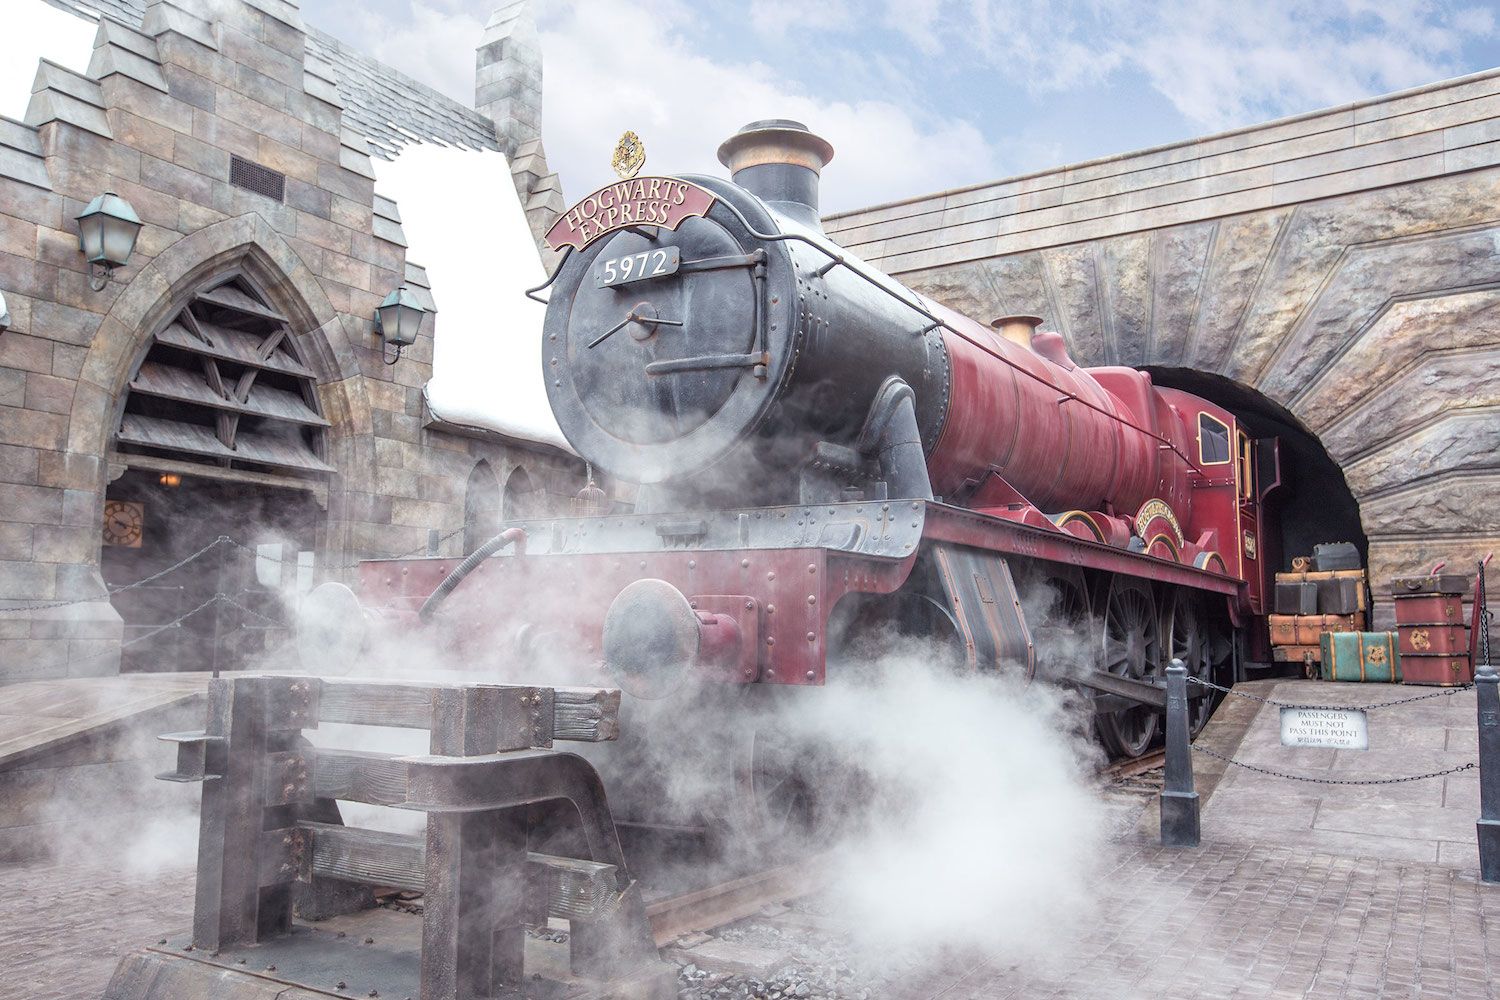 Harry Potter park opens at Universal Studios Japan